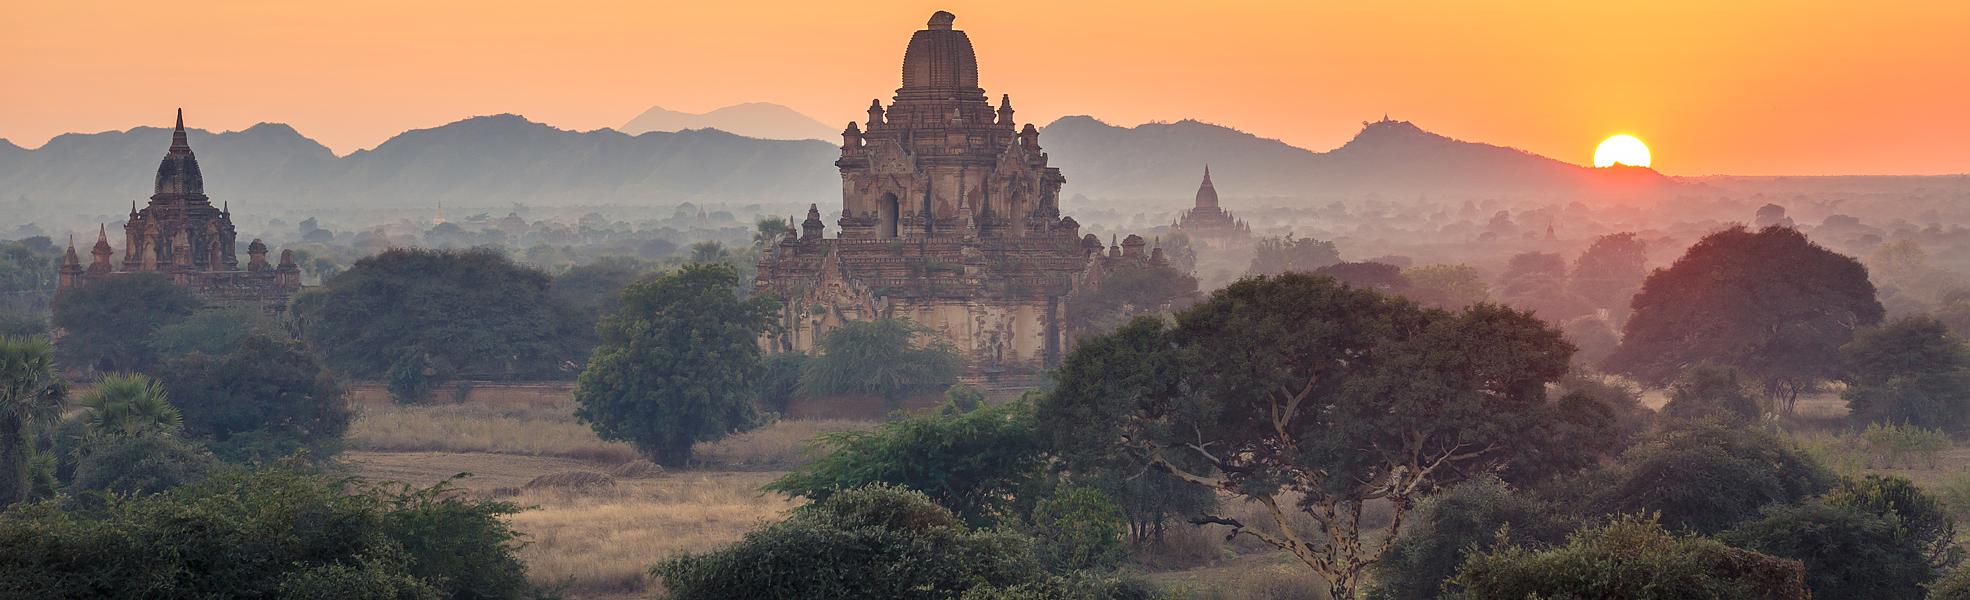 Historic Myanmar and Thailand 